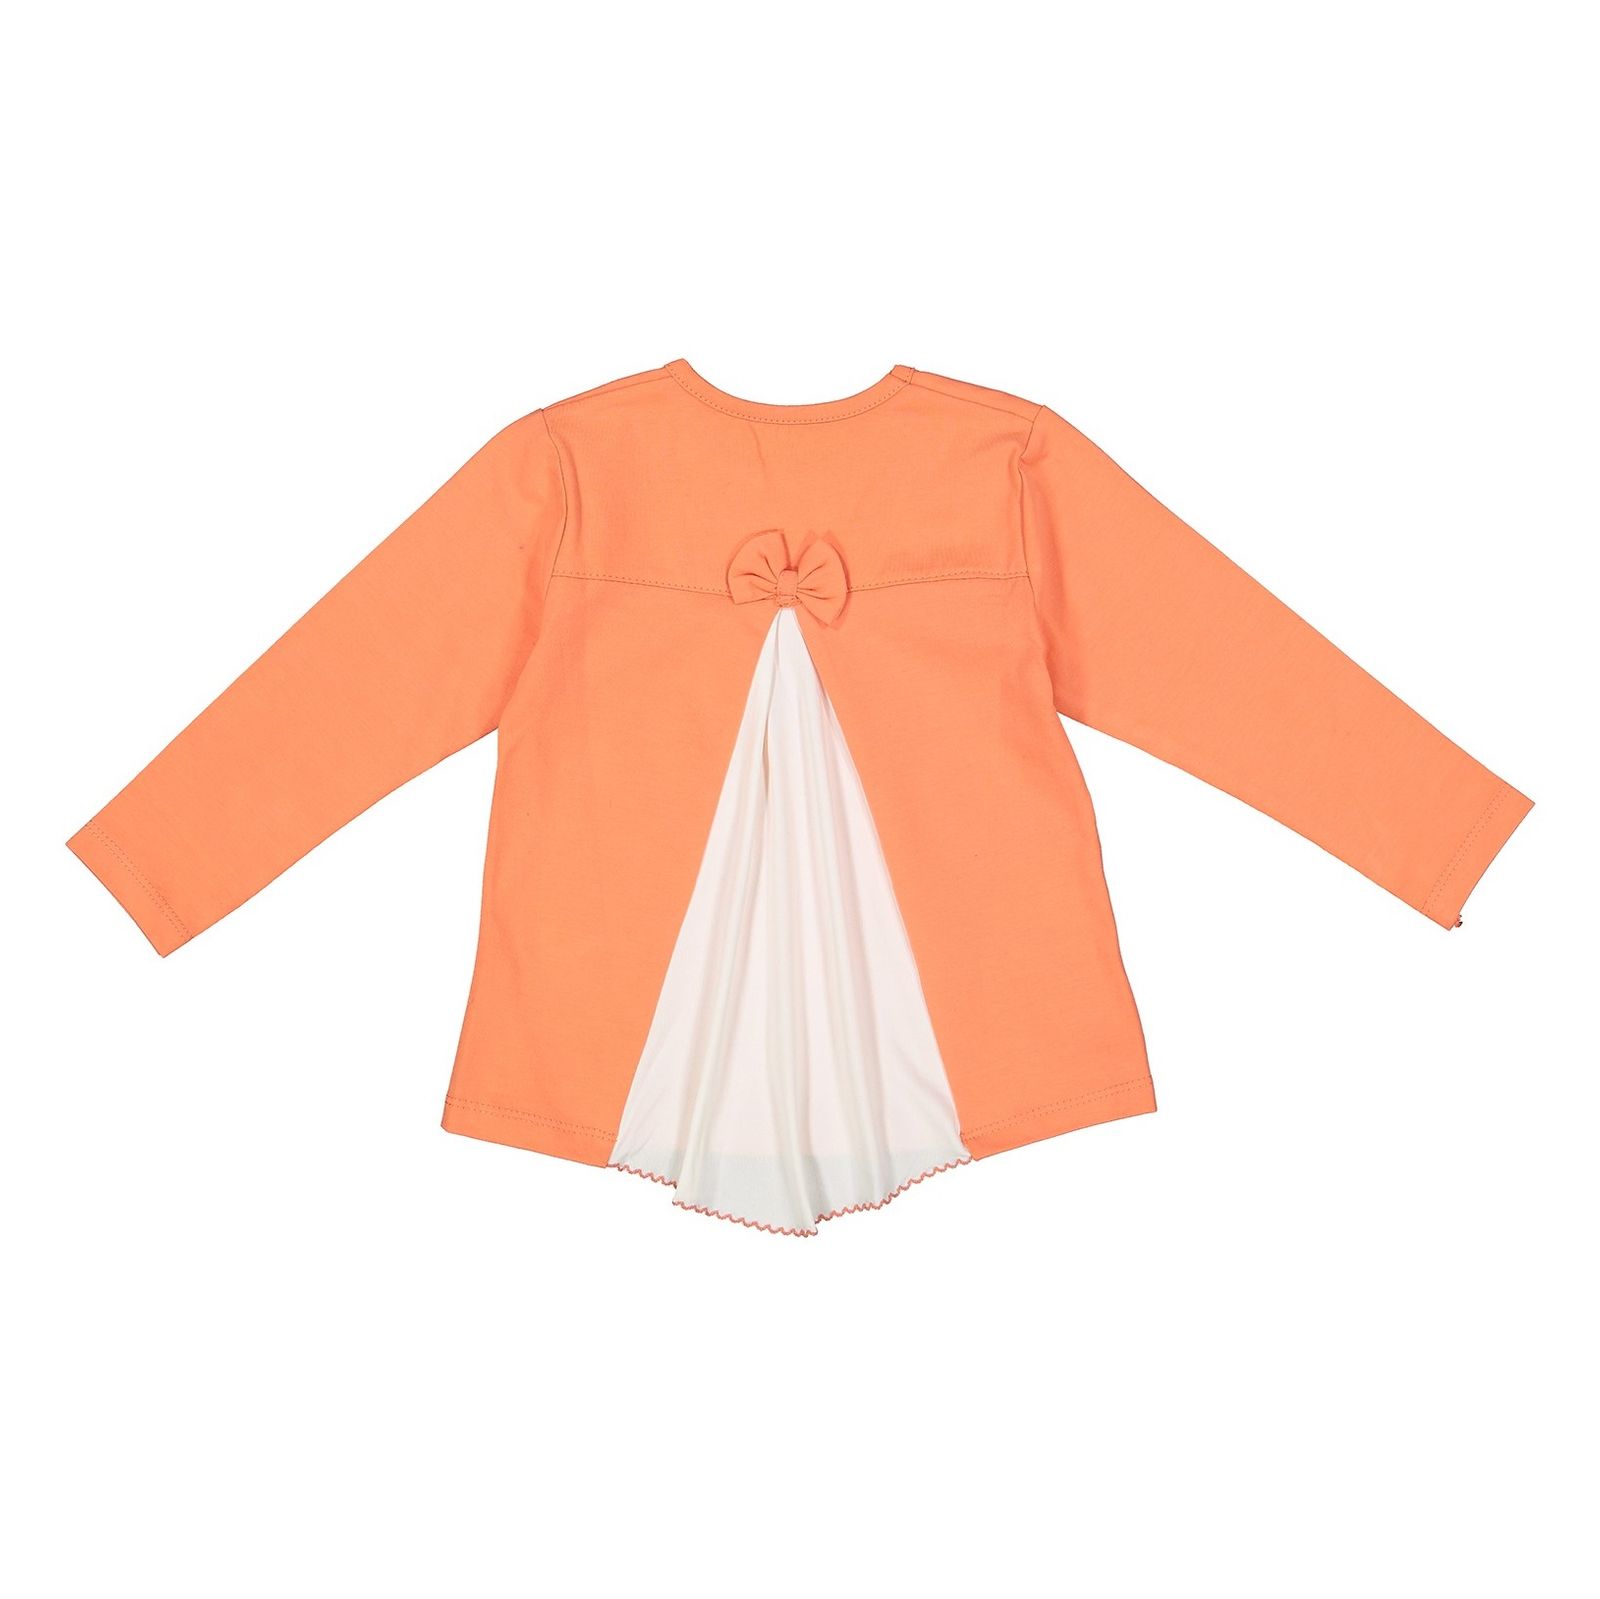 تی شرت نخی یقه گرد دخترانه - سون پون - نارنجي - 3